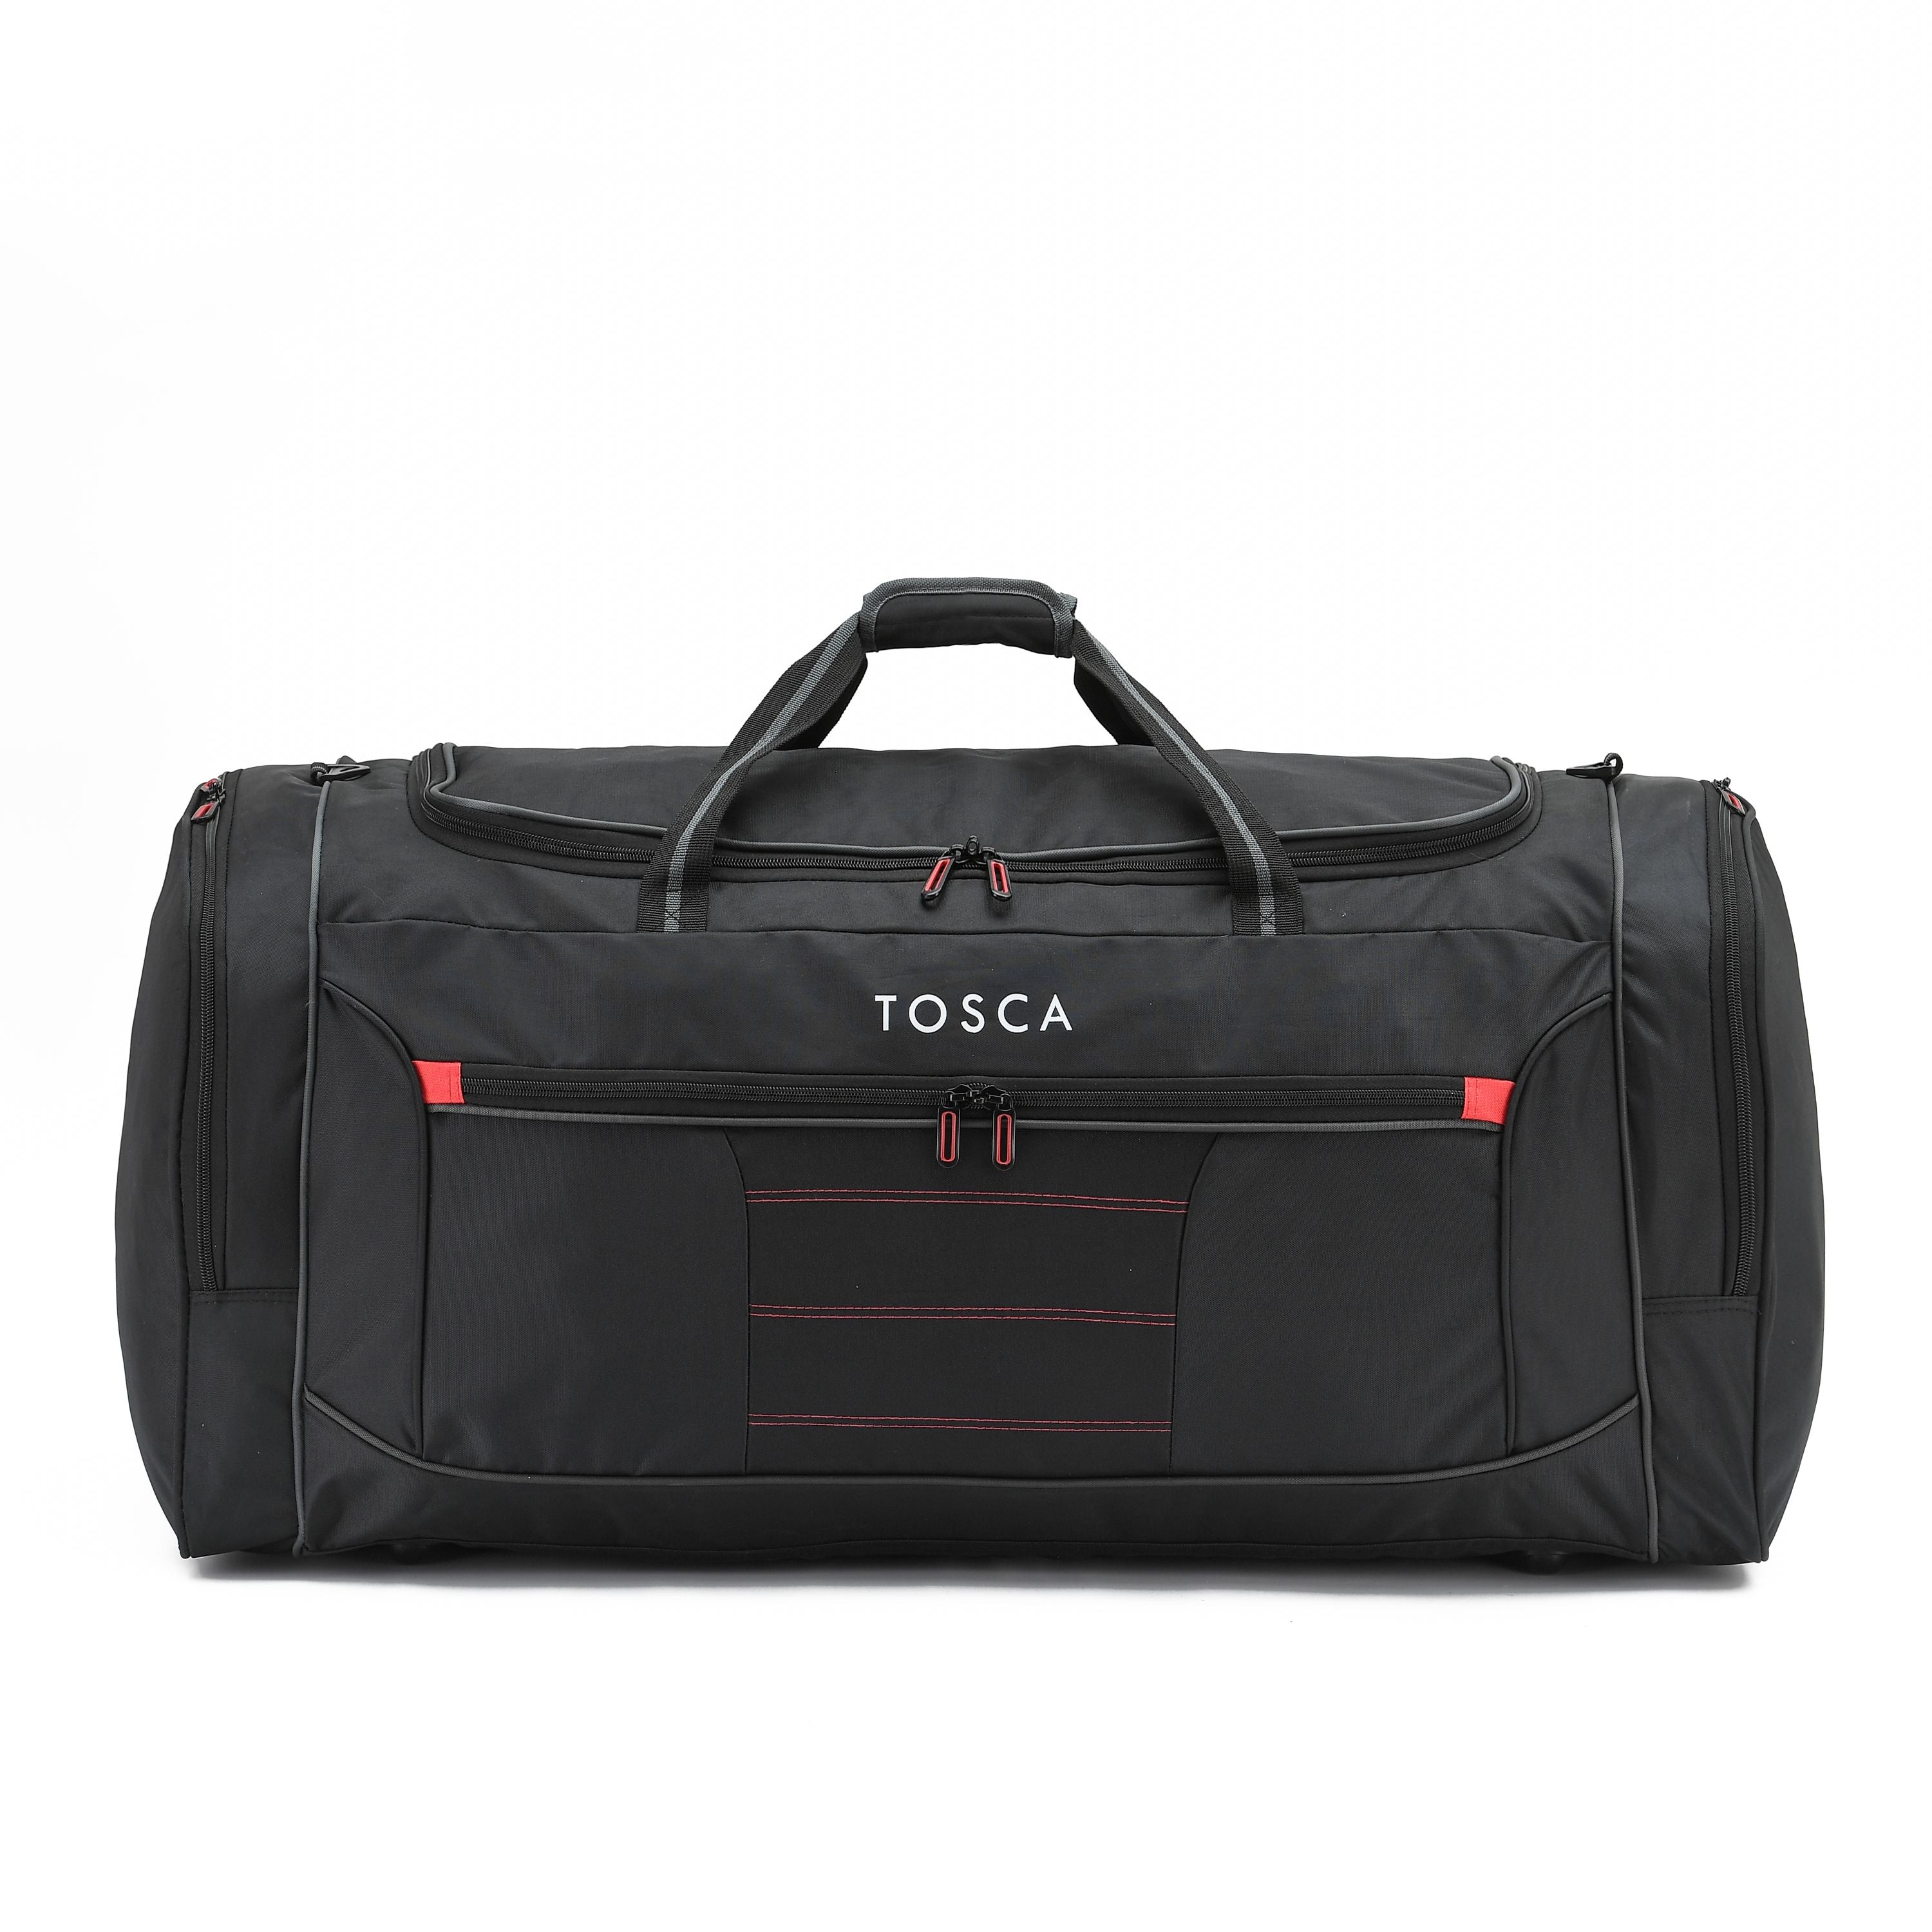 Tosca - TCA794J 90cm Jumbo Duffle Bag - Black/Red